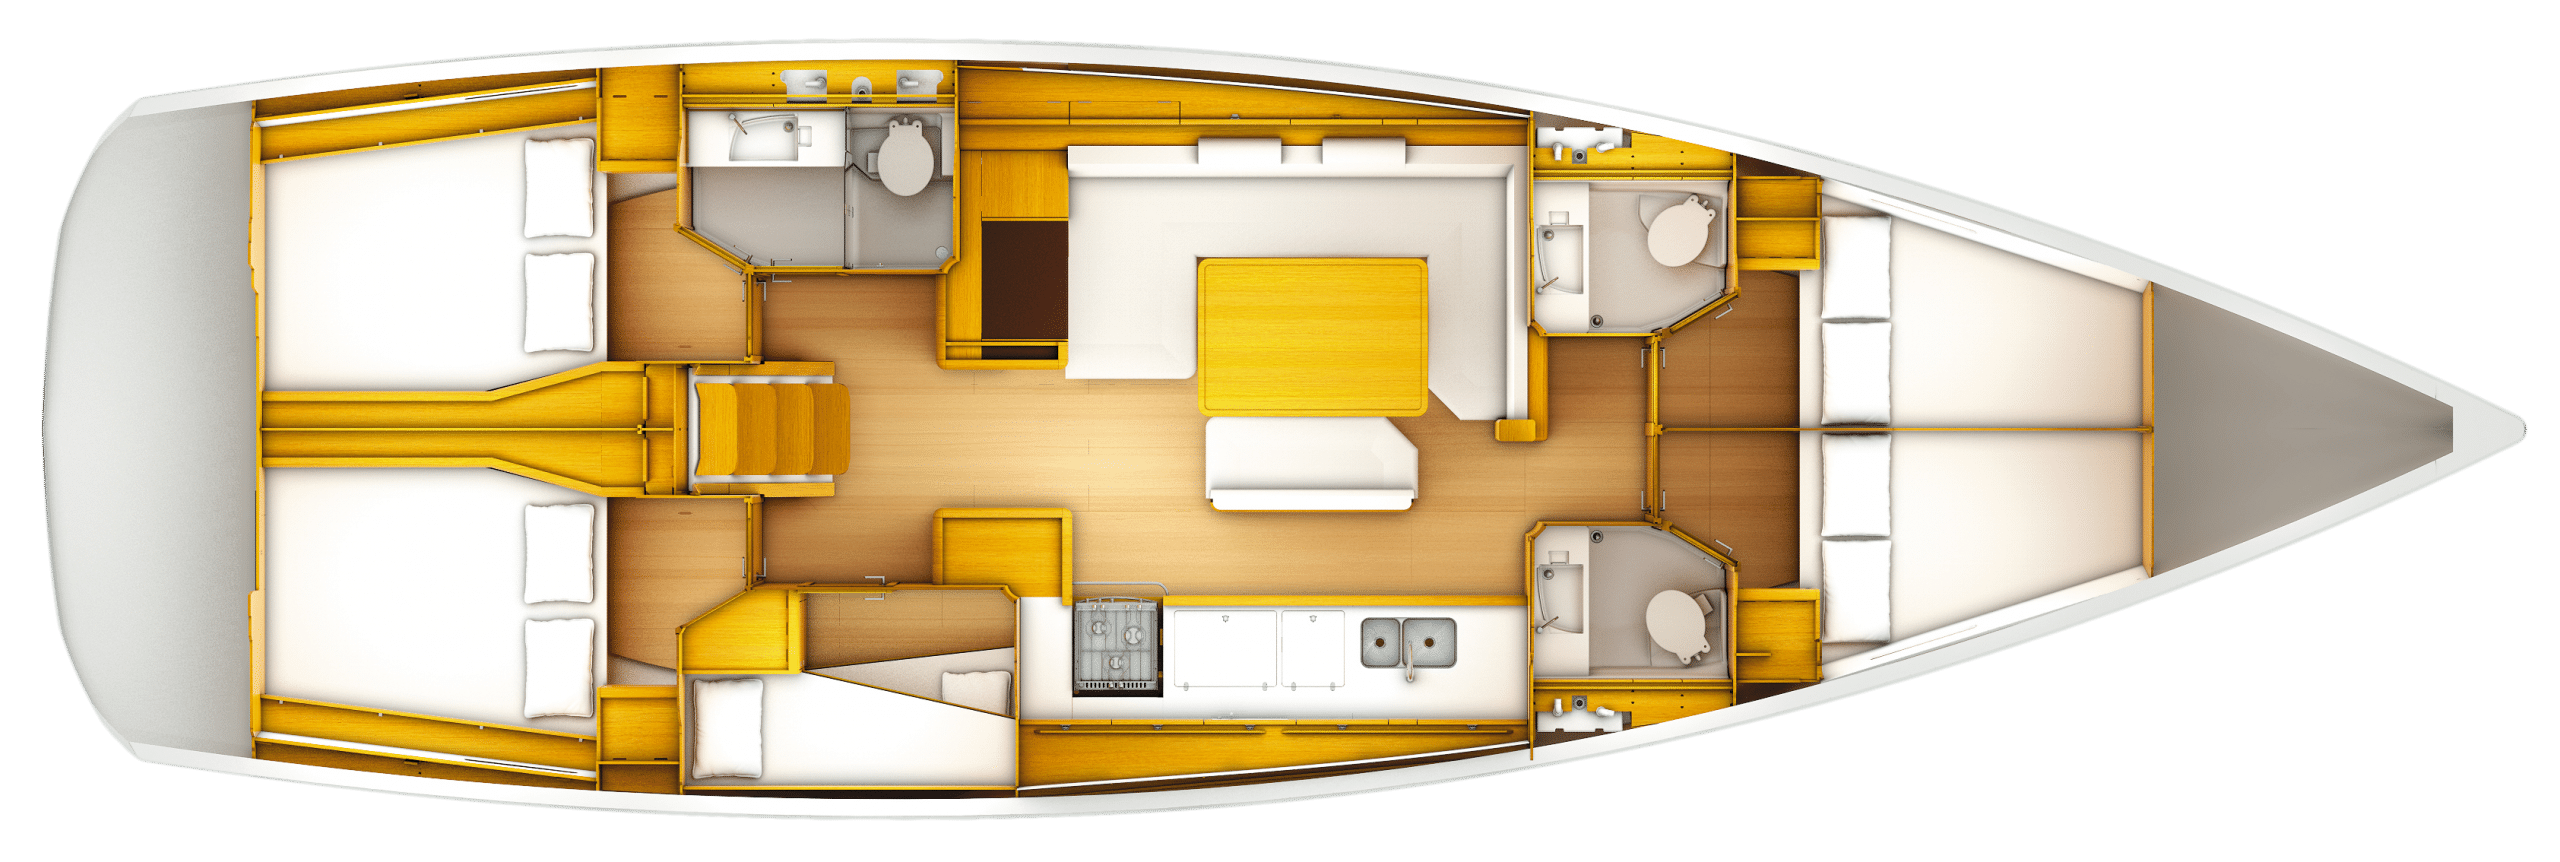 jeanneau-sun-odyssey-519-layout-5-cabins-3-heads